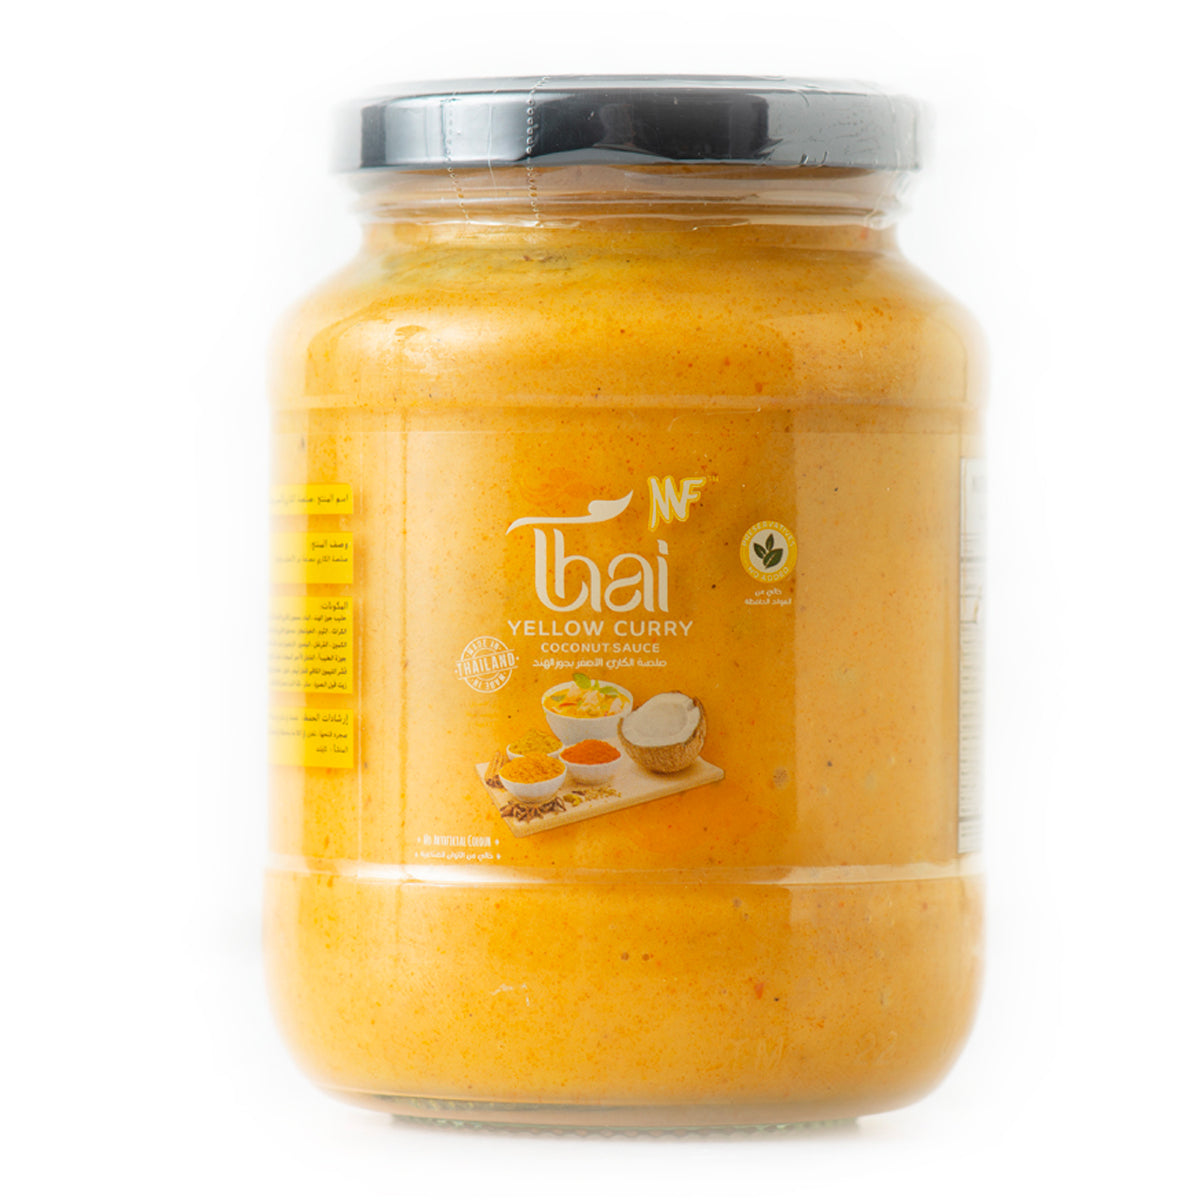 MF Thai Yellow Curry Coconut Sauce 355g